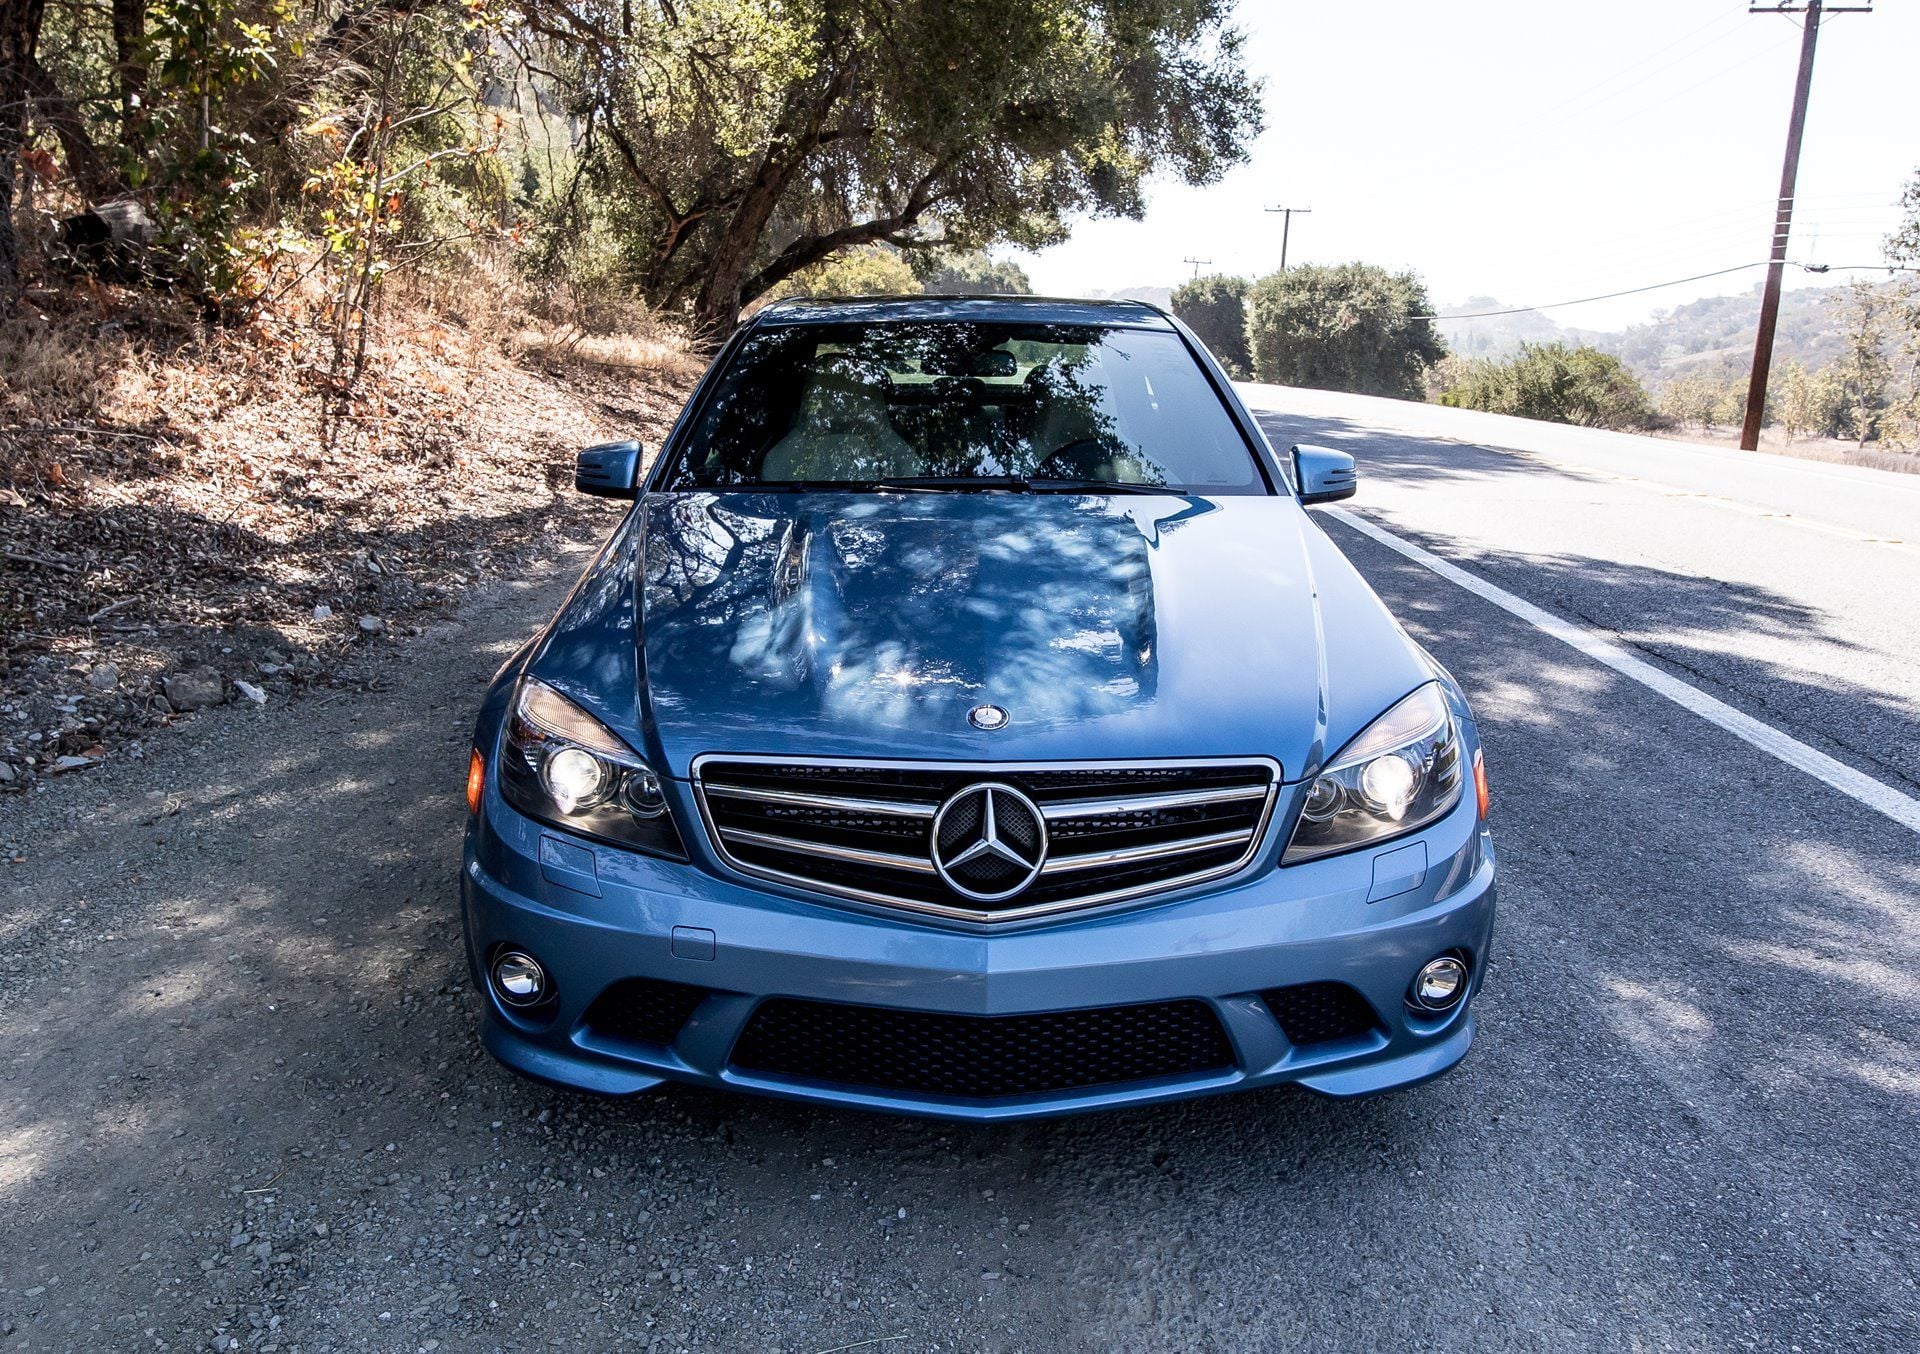 2011 Mercedes-Benz C63 AMG - 2011 C63 AMG P31+LSD SoCal 15k Miles Quartz Blue - Used - VIN WDDGF7HB8BF587663 - 15,285 Miles - 8 cyl - 2WD - Automatic - Sedan - Blue - Lake Forest, CA 92630, United States